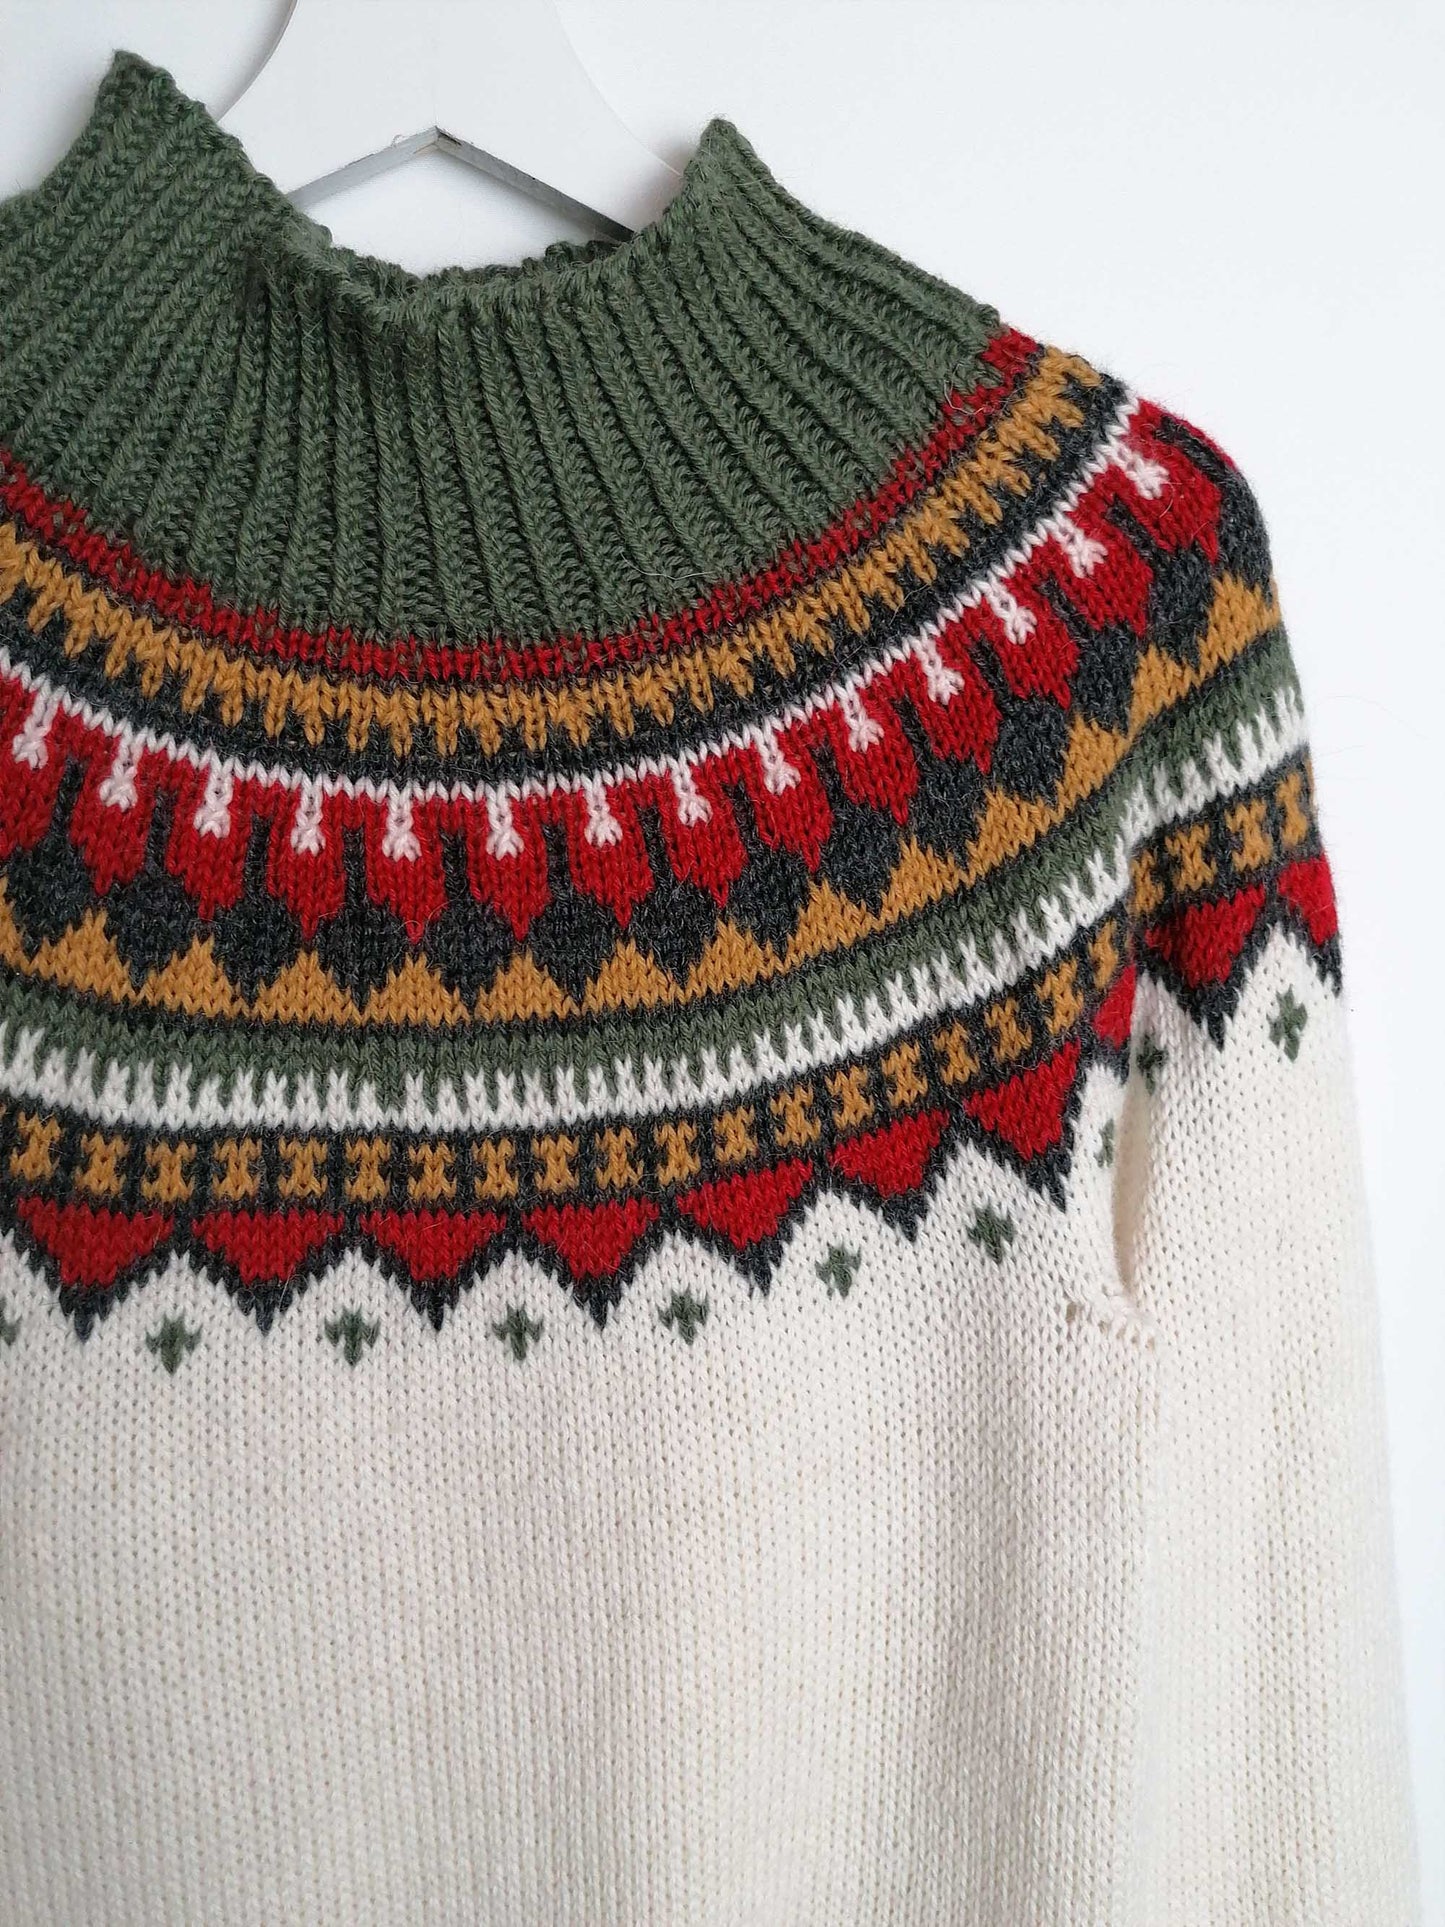 80's Fair Isle Retro Ski Sweater - size S-M